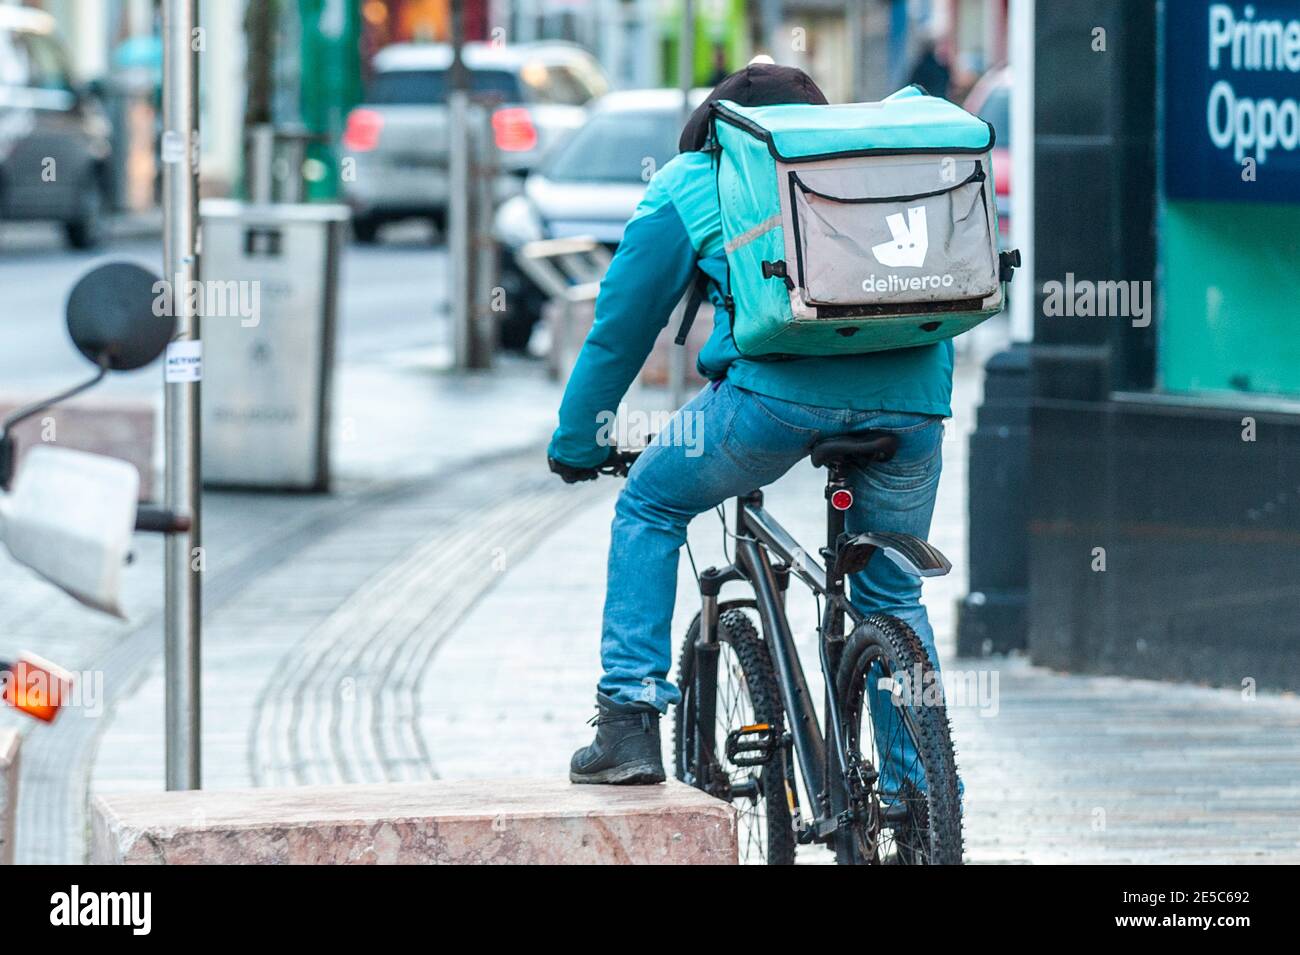 Deliveroo food delivery rider in Cork city, Ireland. Stock Photo